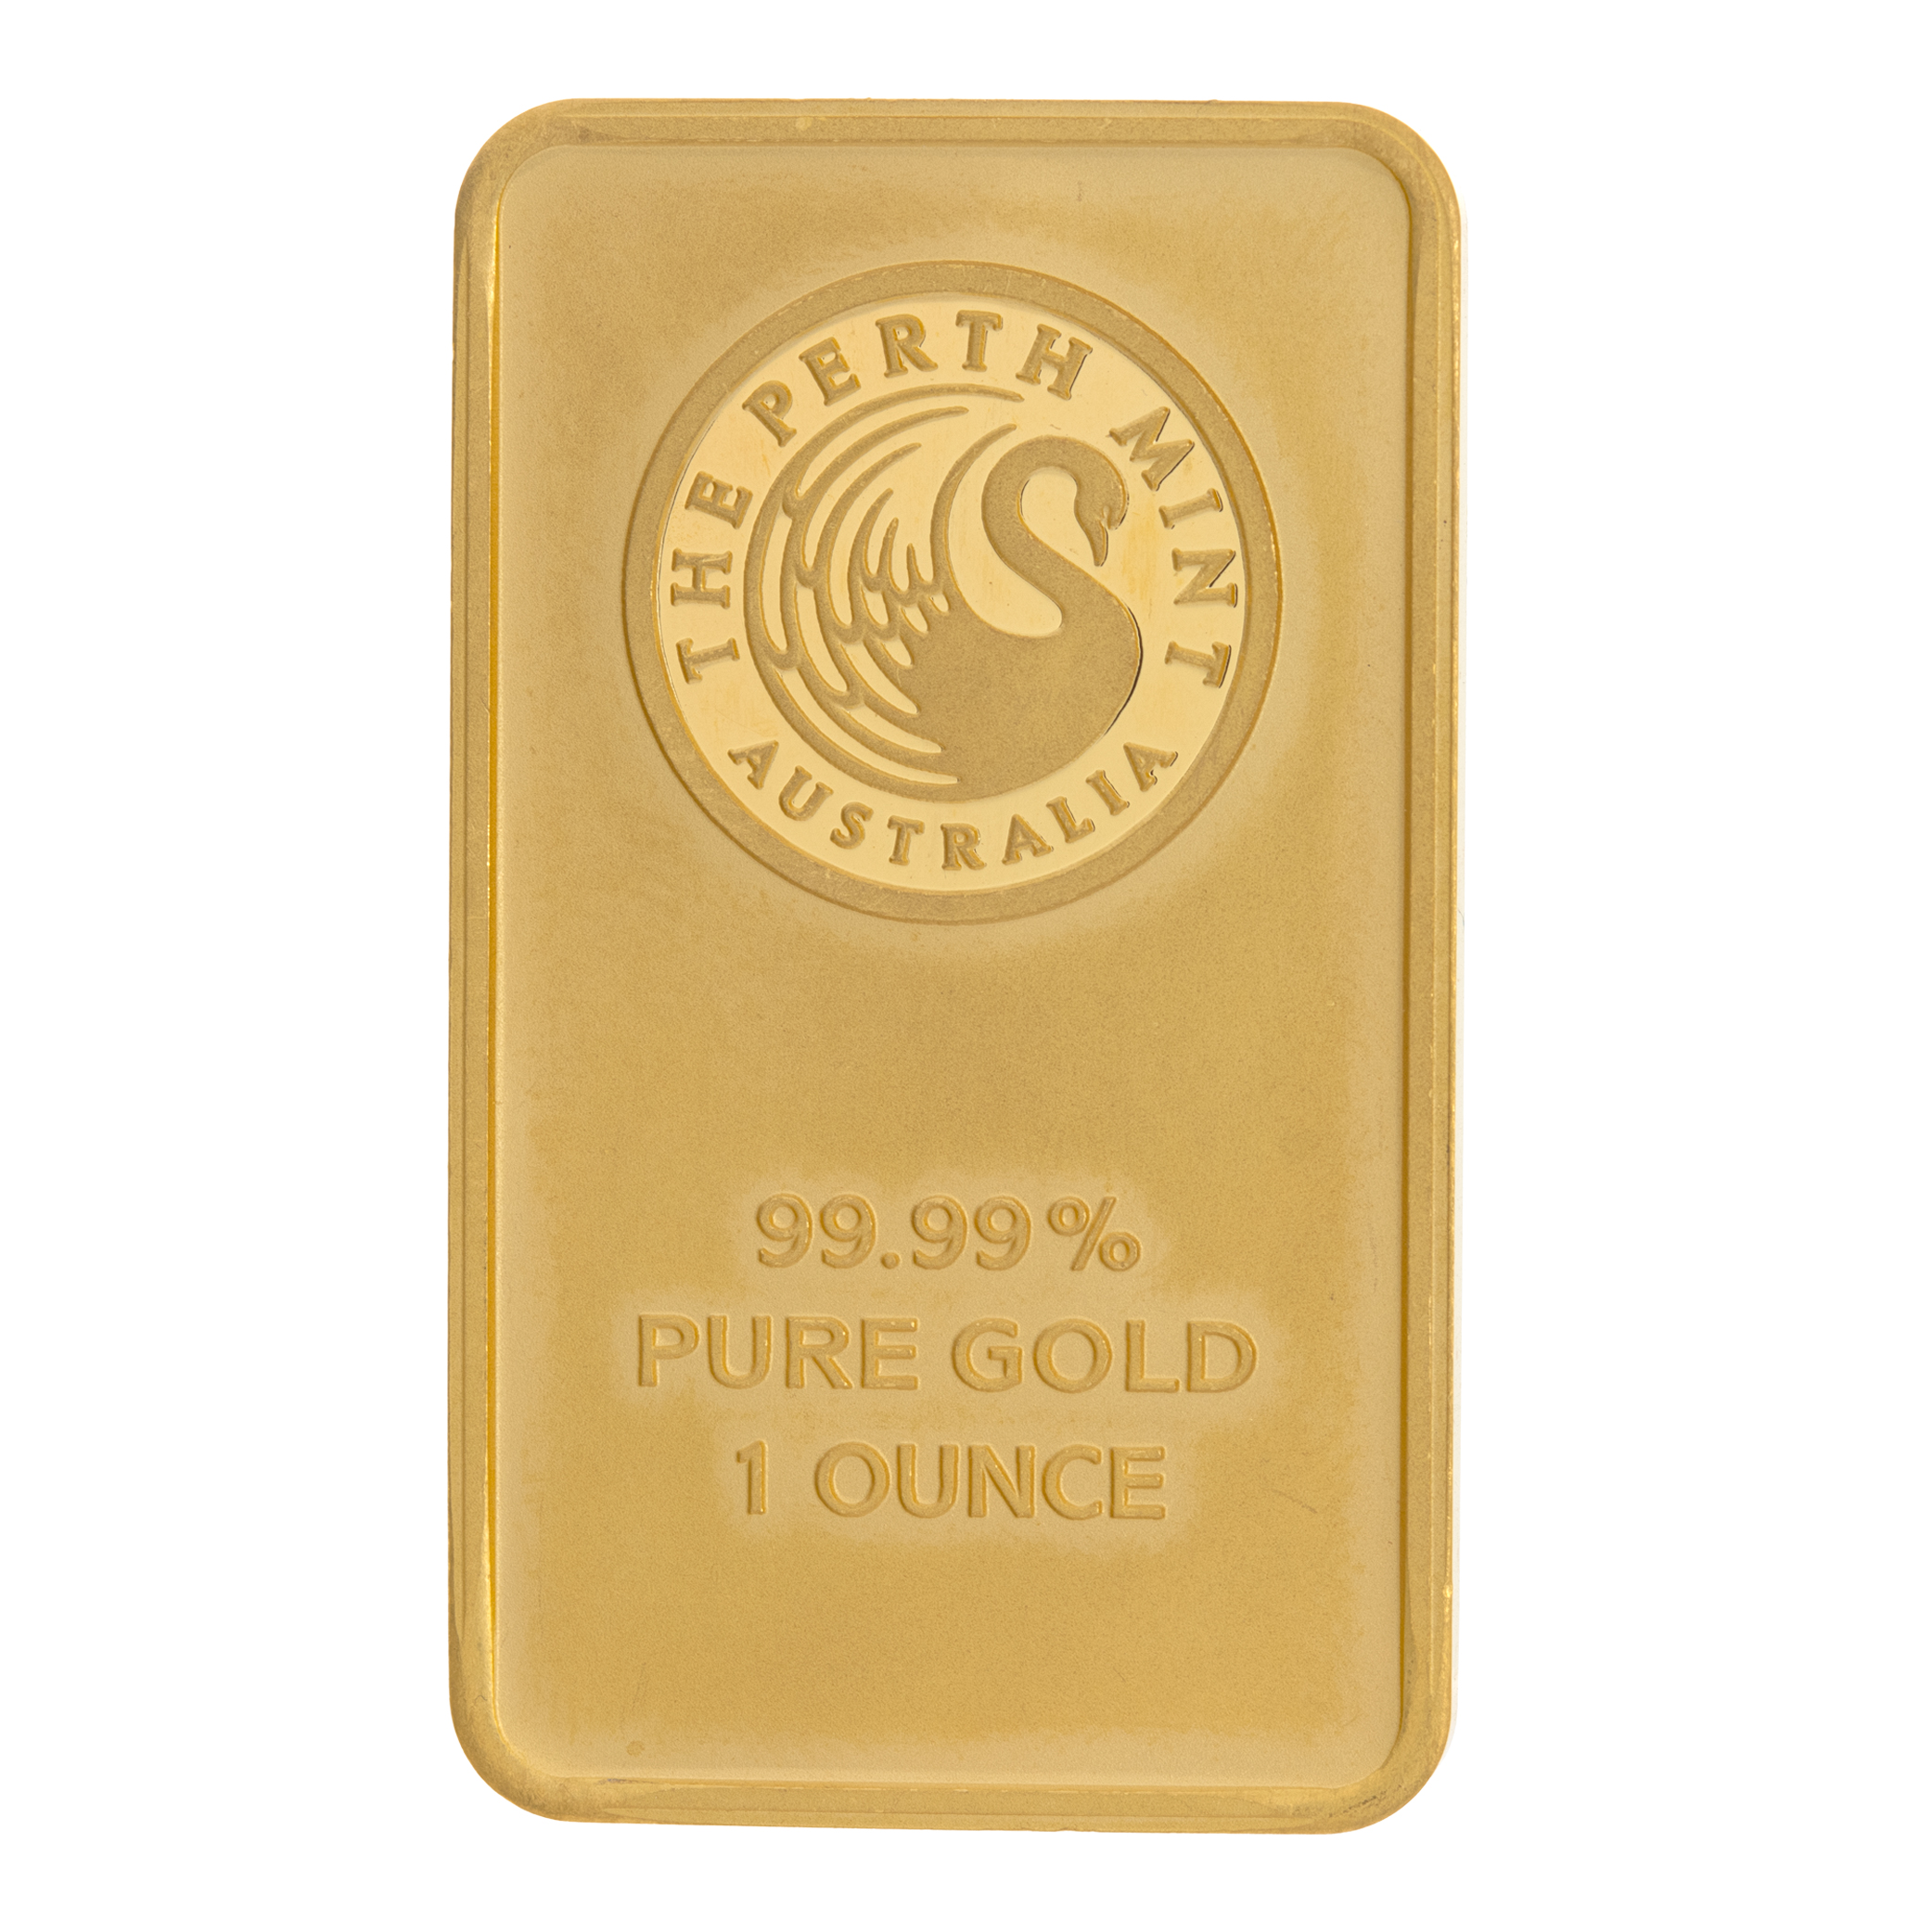 The Perth Mint Australia .999 fine 1 ounce gold bar